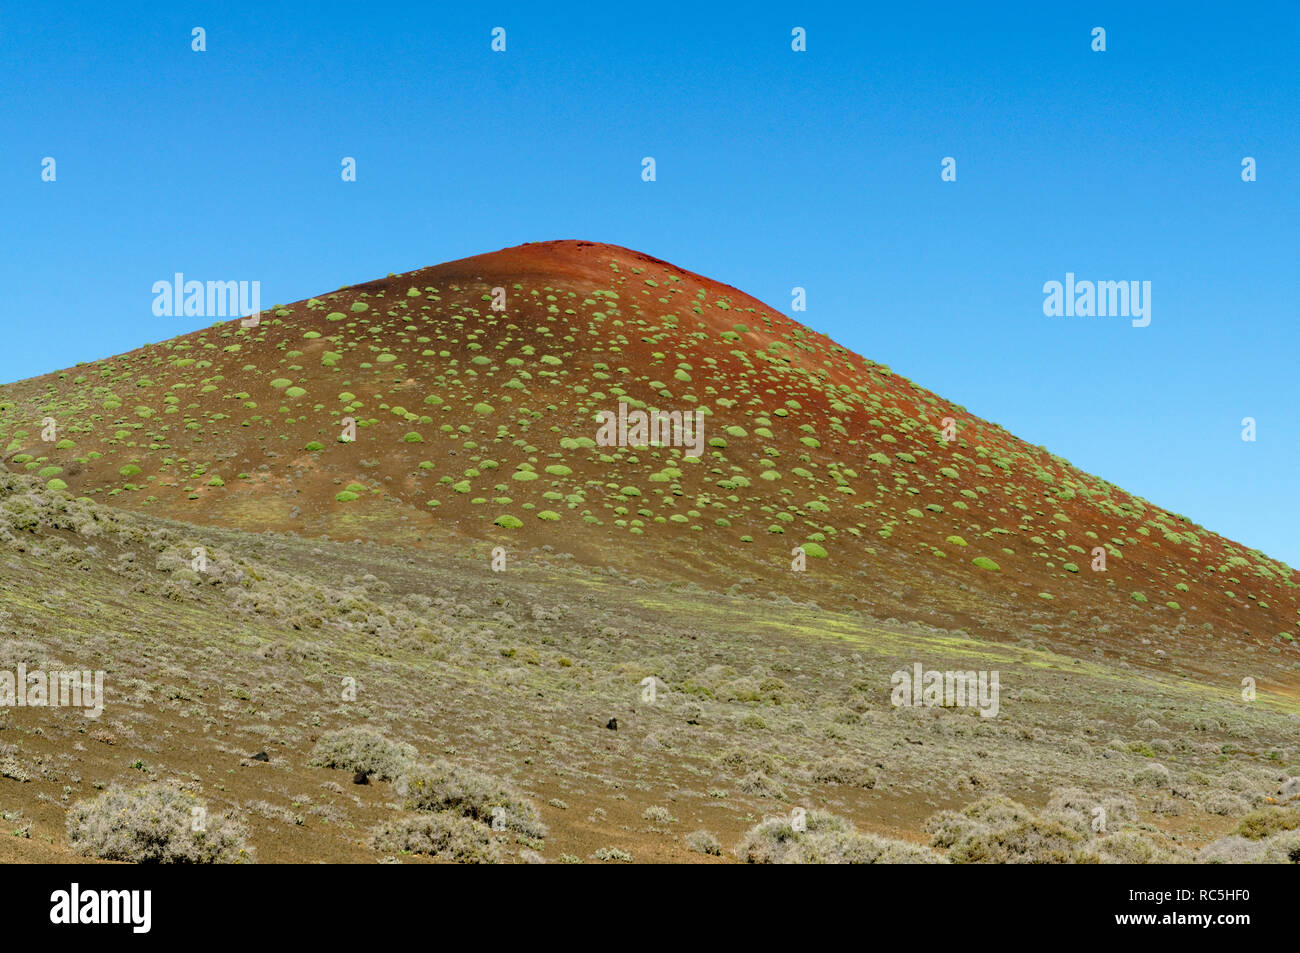 Volcanic hill covered in vegitation, near El golfo, Canary Islands, Spain. Stock Photo